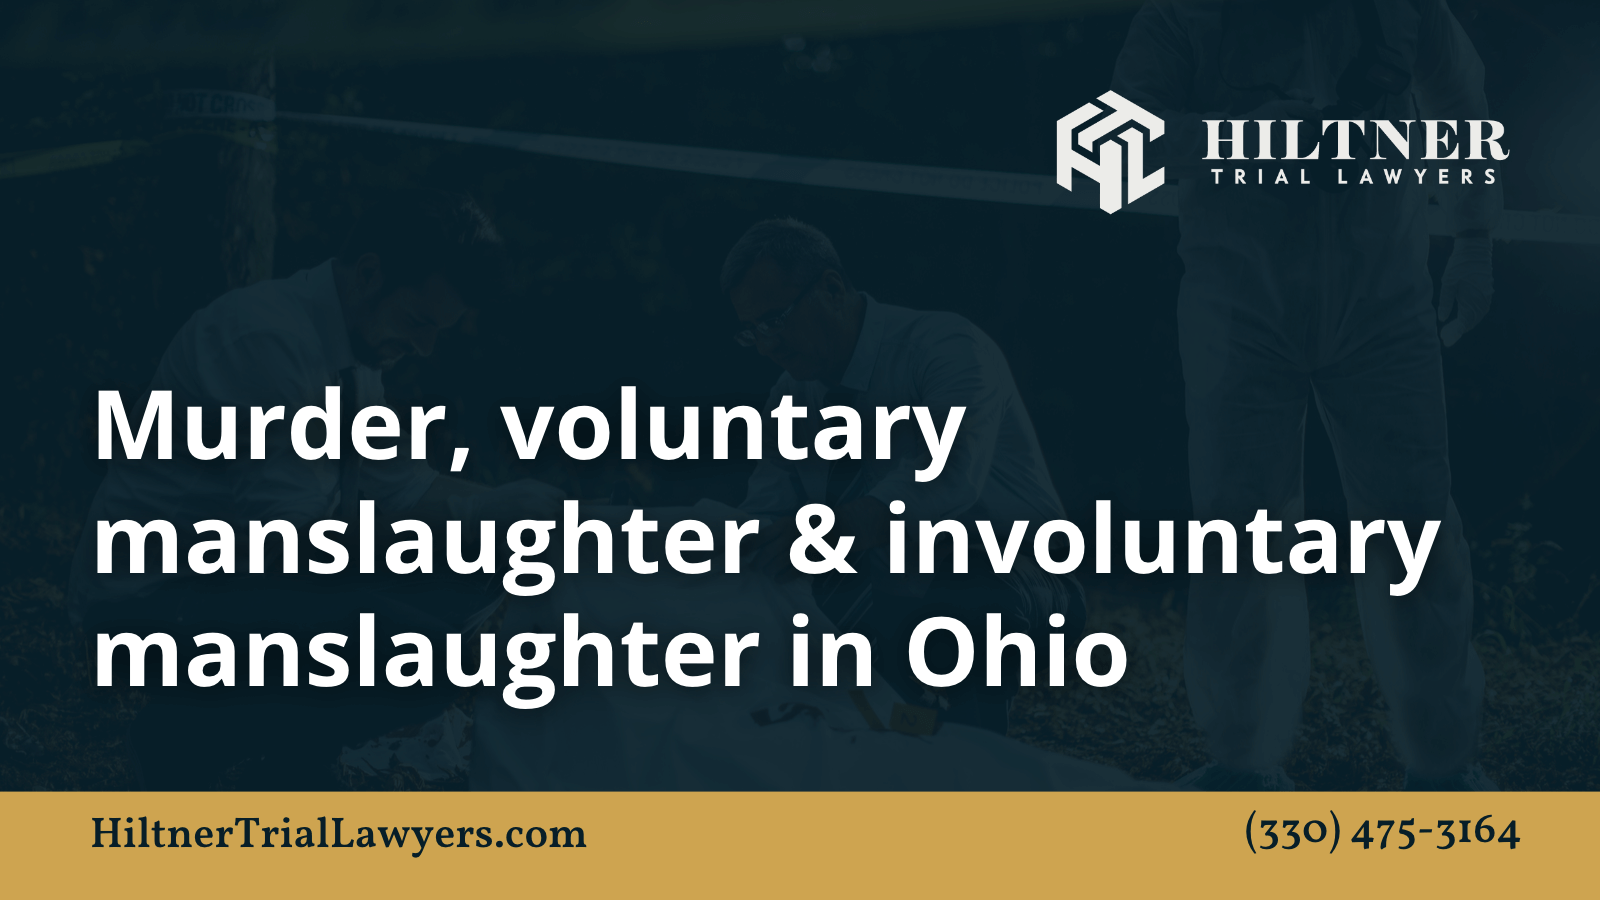 Murder, voluntary manslaughter & involuntary manslaughter in Ohio - Hiltner Trial Lawyers Ohio - max hiltner